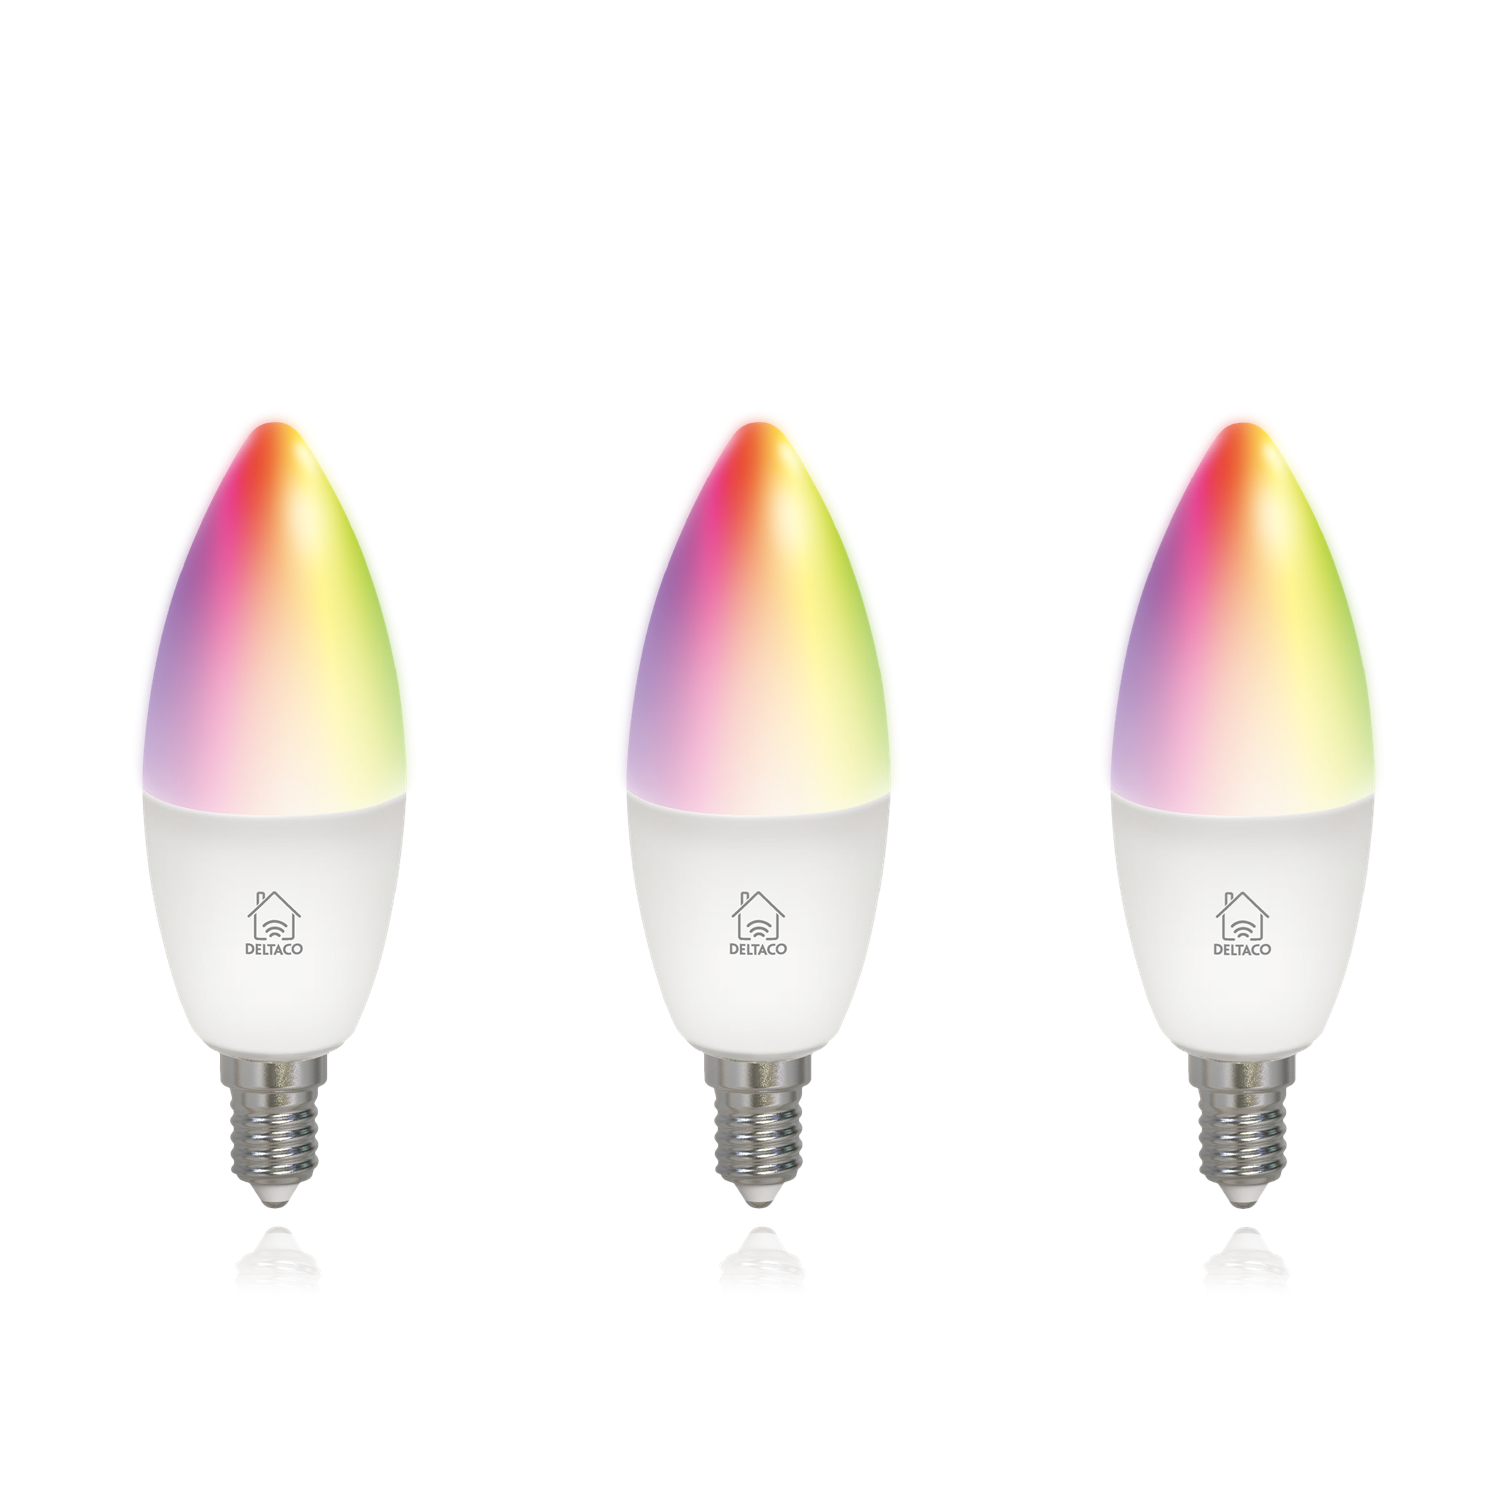 DELTACO SMART HOME warmweiß, Smarte E14 LED Kerze RGB smart Glühbirne RGB